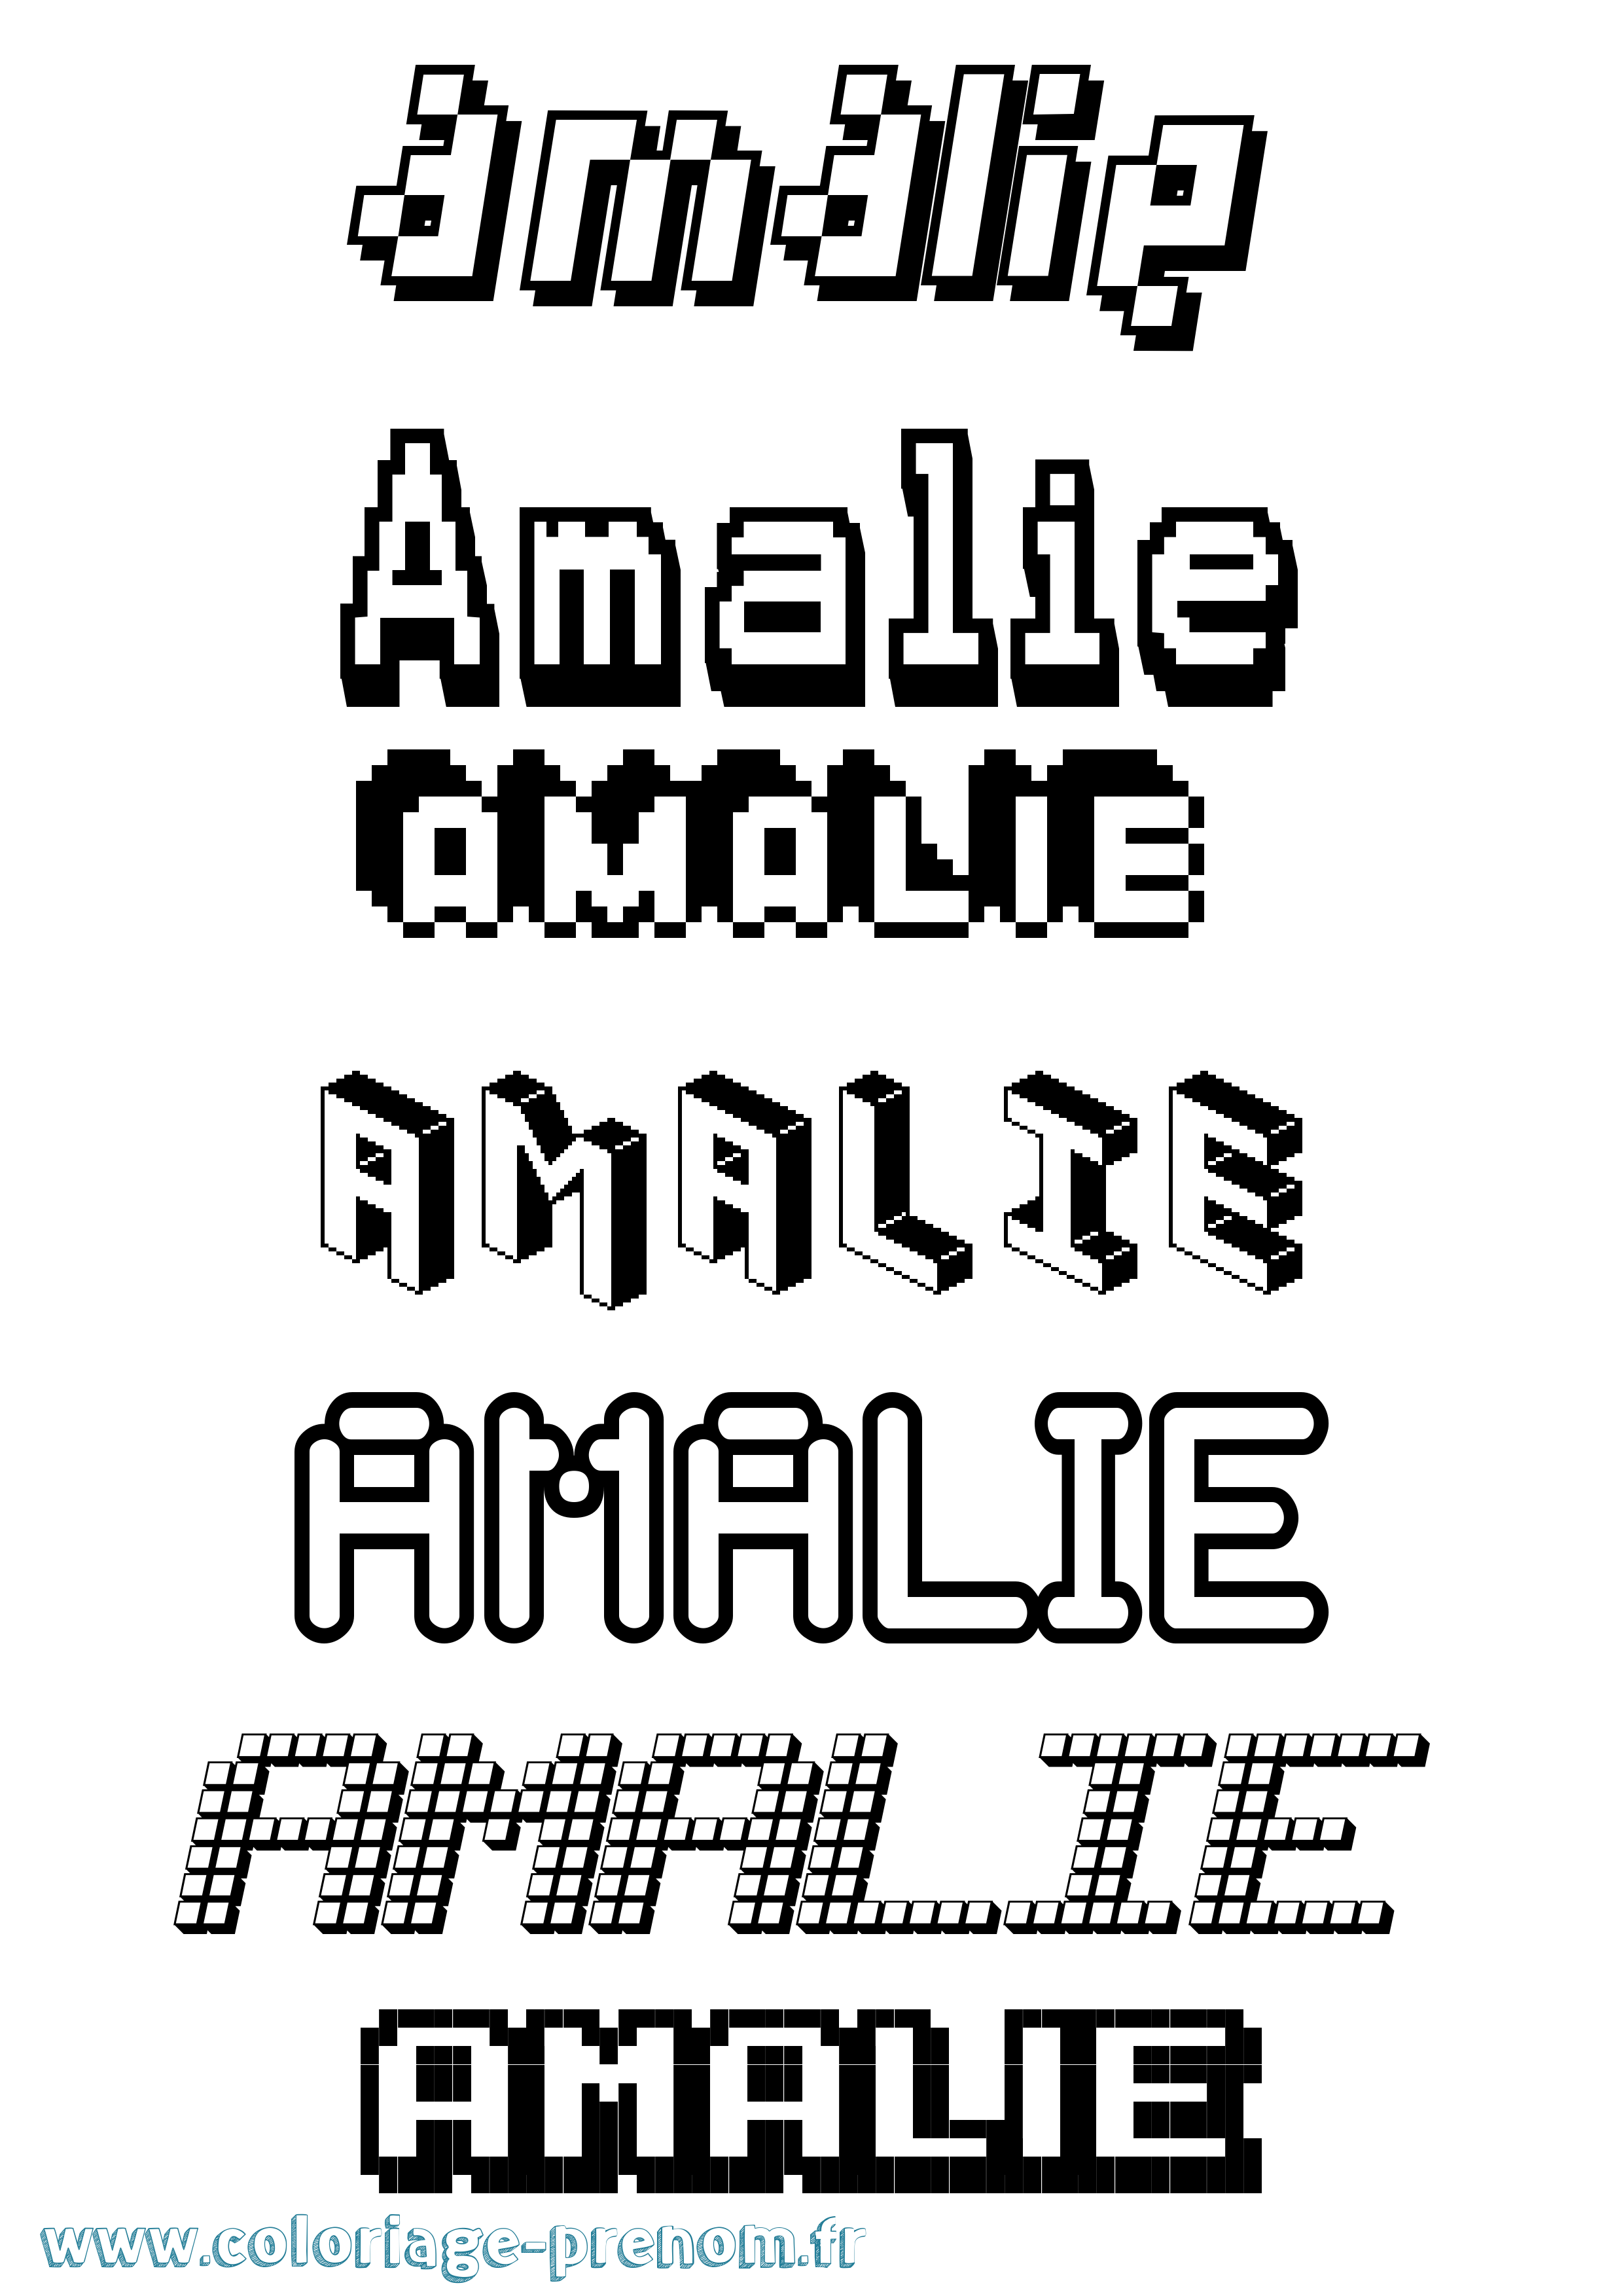 Coloriage prénom Amalie Pixel